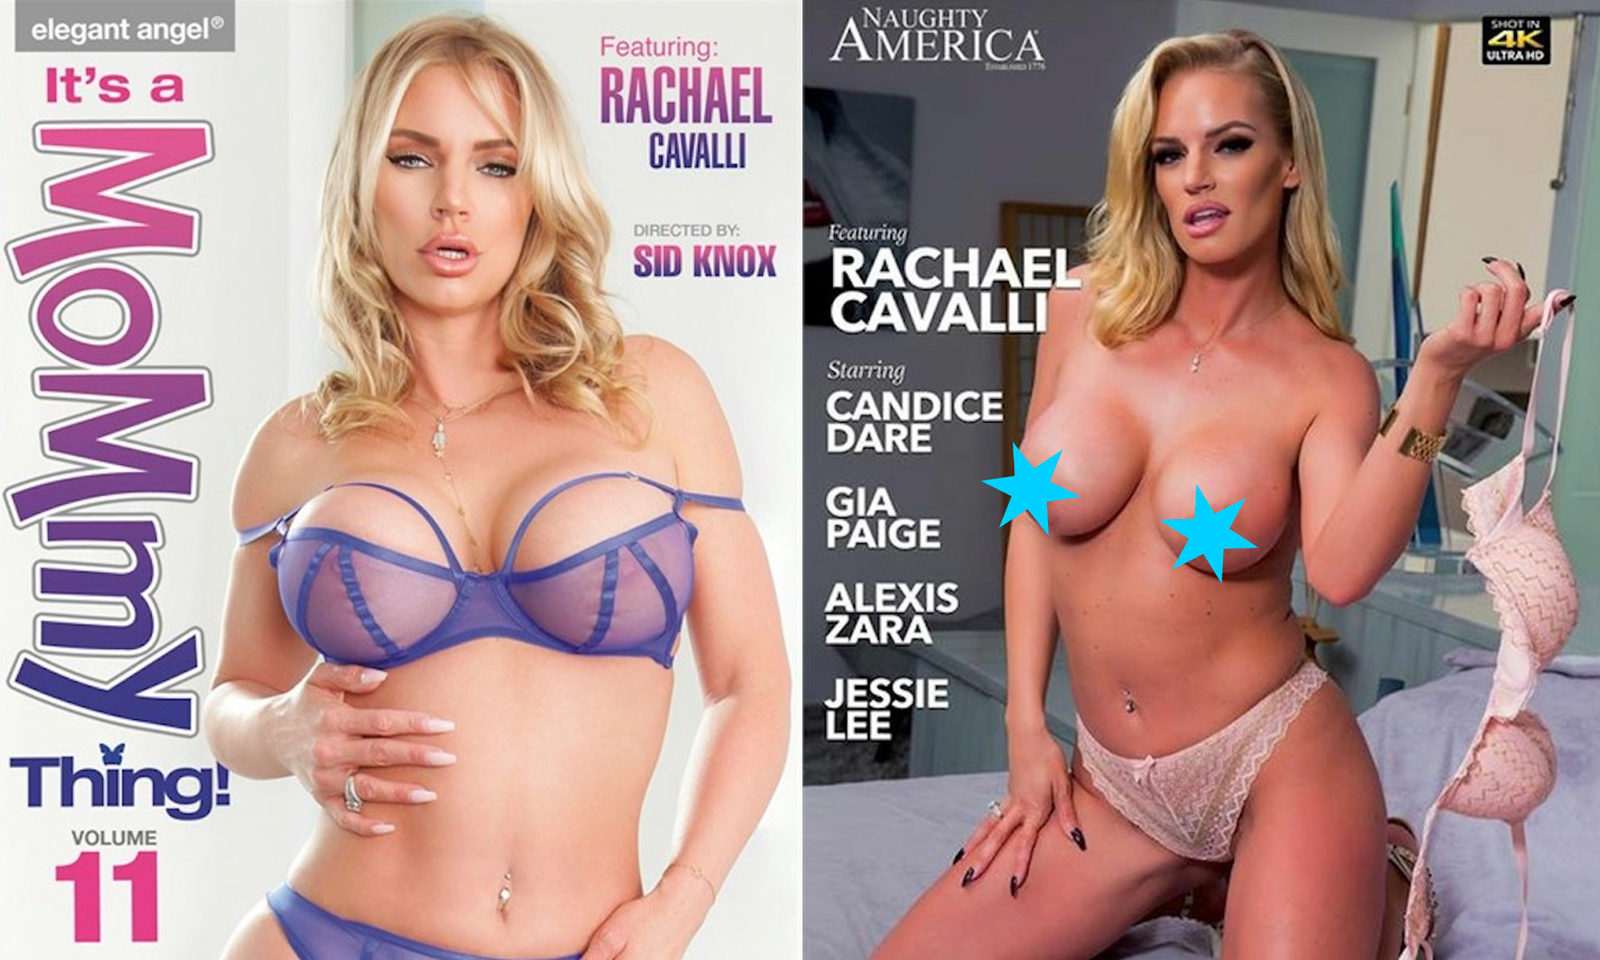 Rachael Cavalli Scores Elegant Angel, Naughty America Covers